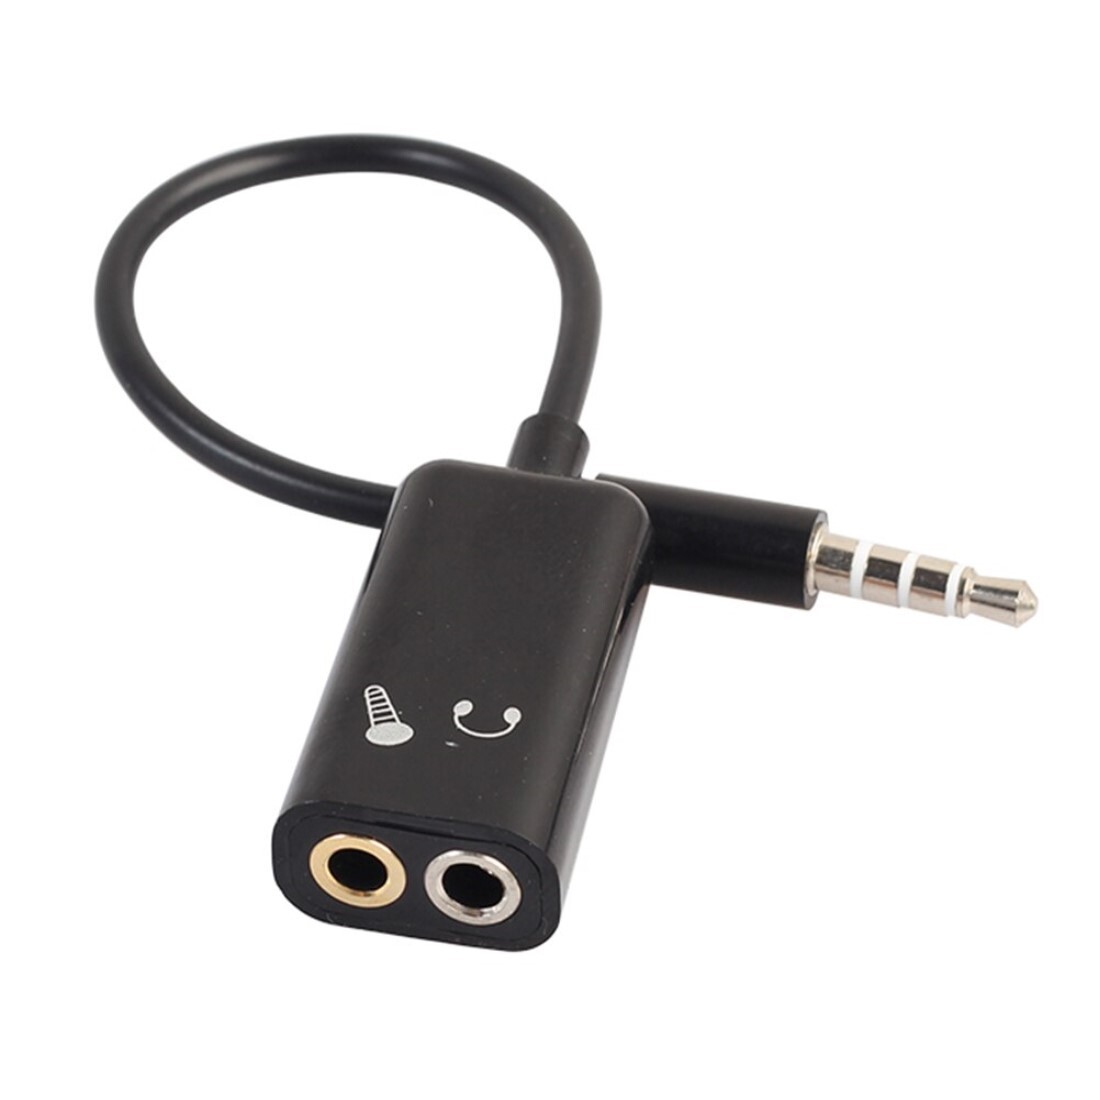 Переходник для наушников джек 3.5. Переходник для наушников Jack 3.5 mm аудио сплиттер аудио адаптер. Аудио переходник aux сплиттер. Переходник для наушников стерео 6,3. Разветвитель для наушников USB Corsair.